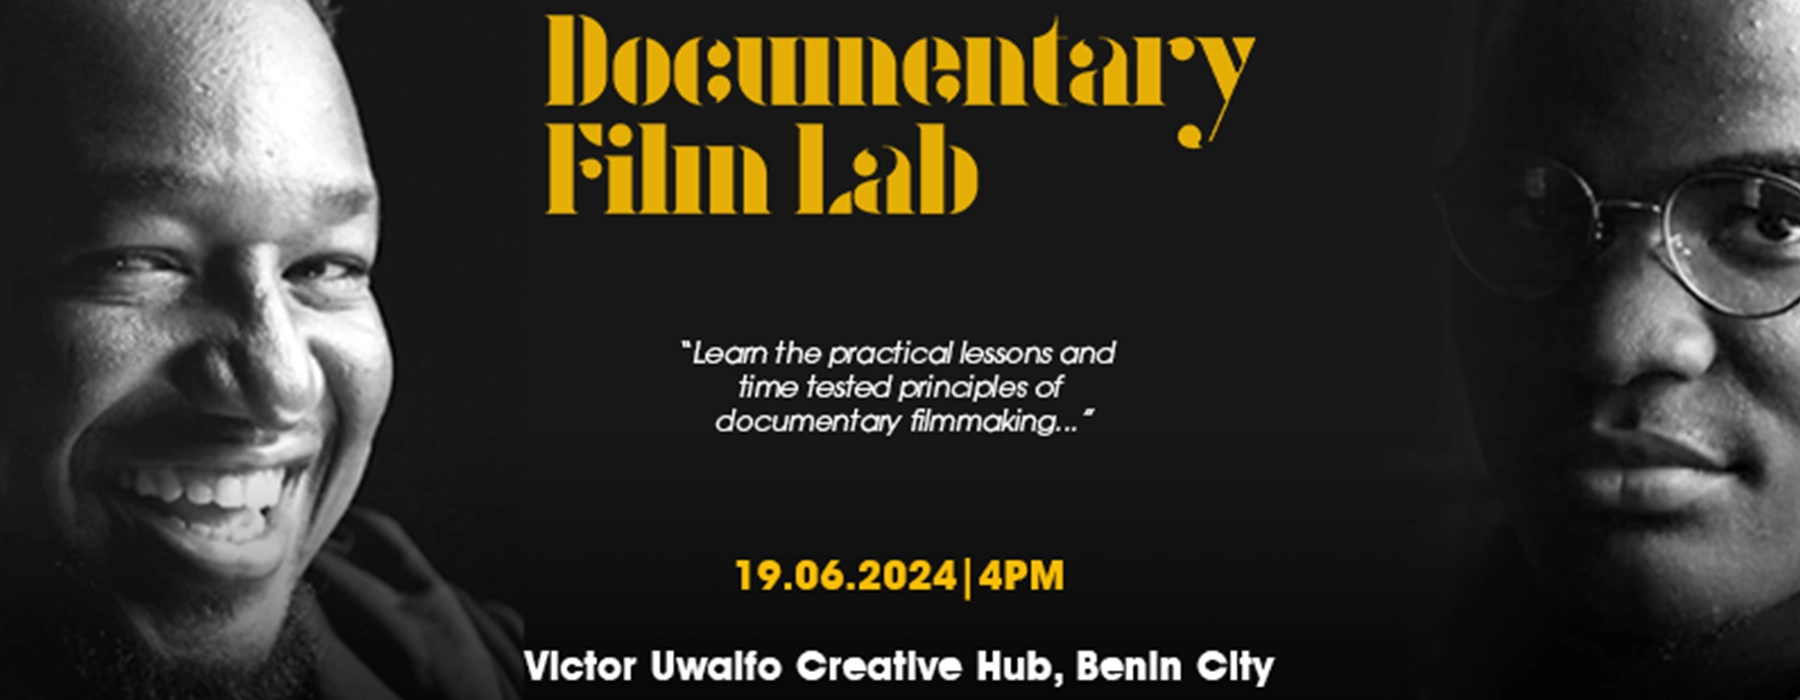 Documentary Film Lab